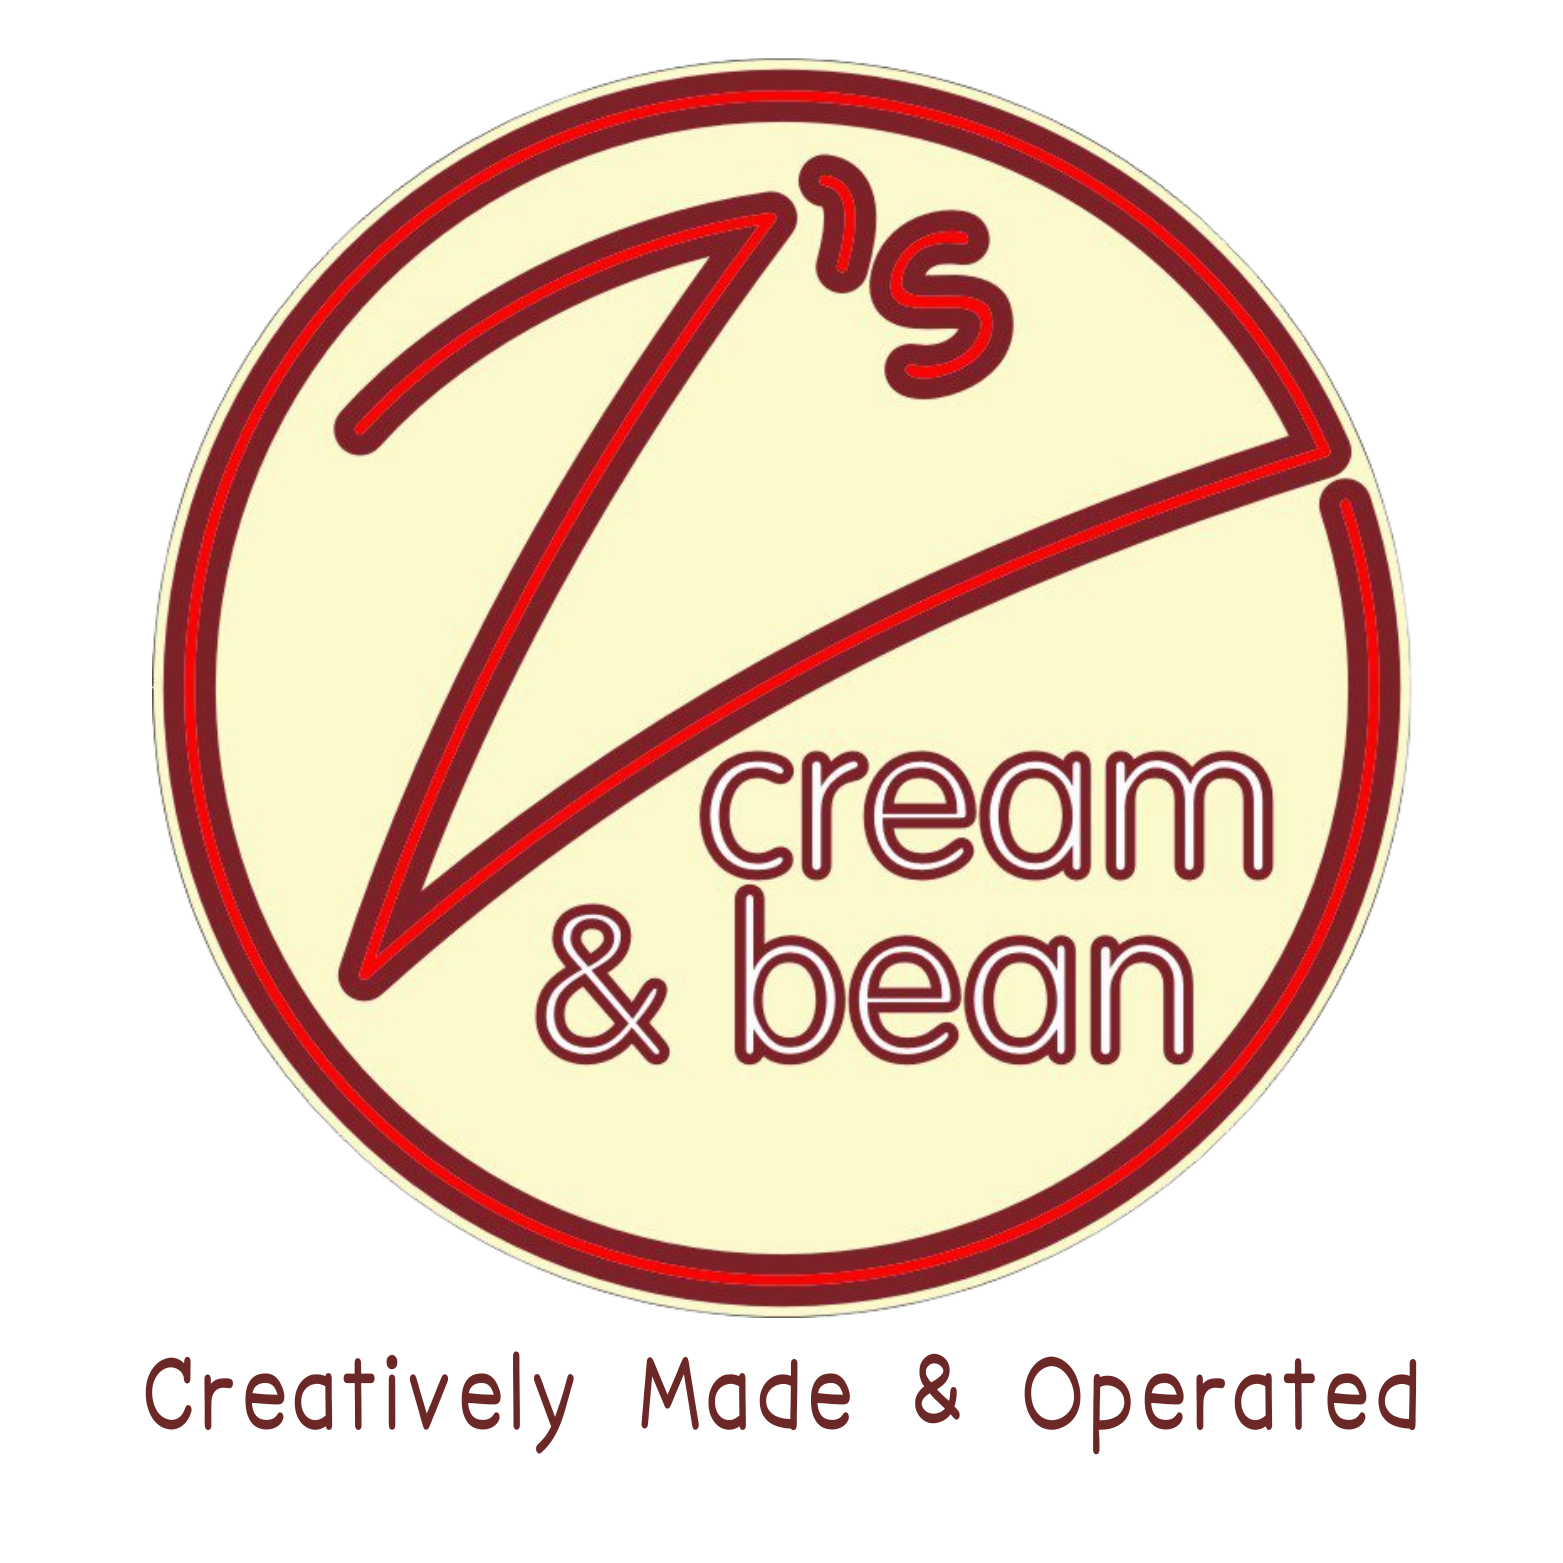 Z's Cream & Bean